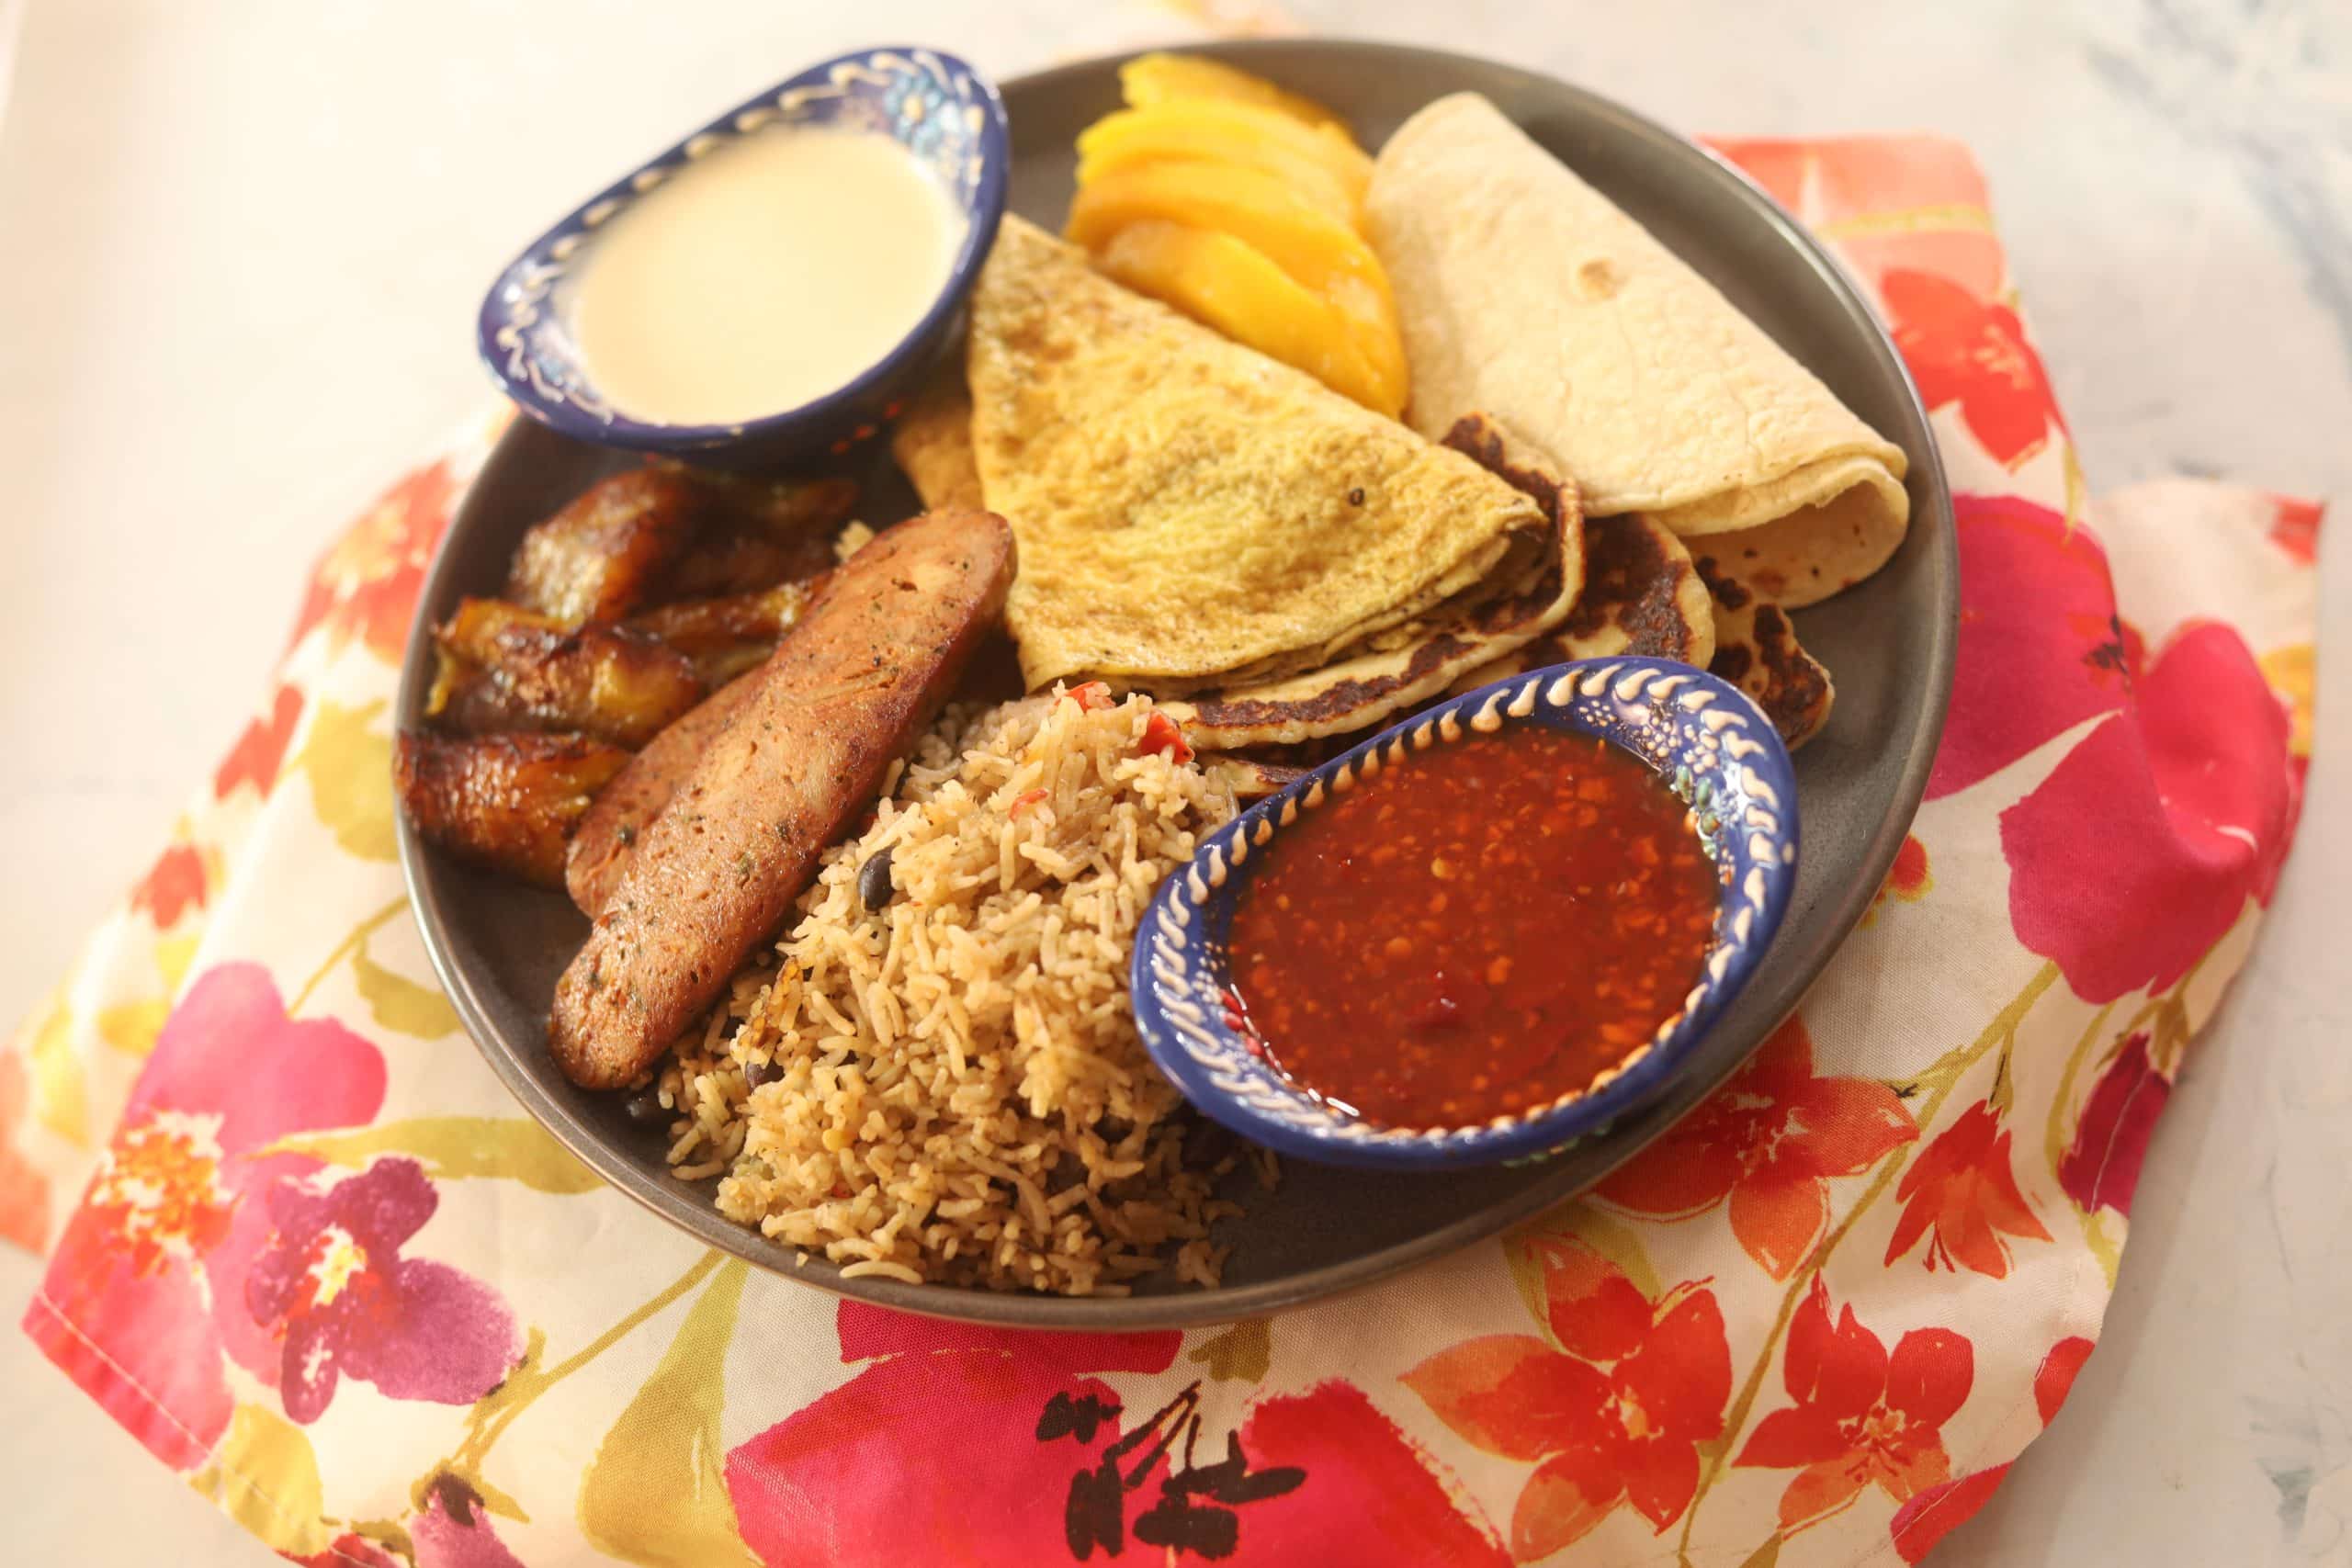 Costa Rican Breakfast Platter with Salsa Lizano, Galo Pinto, Chorizo, Tortillas, Fruit, Fried Plantain and Crema